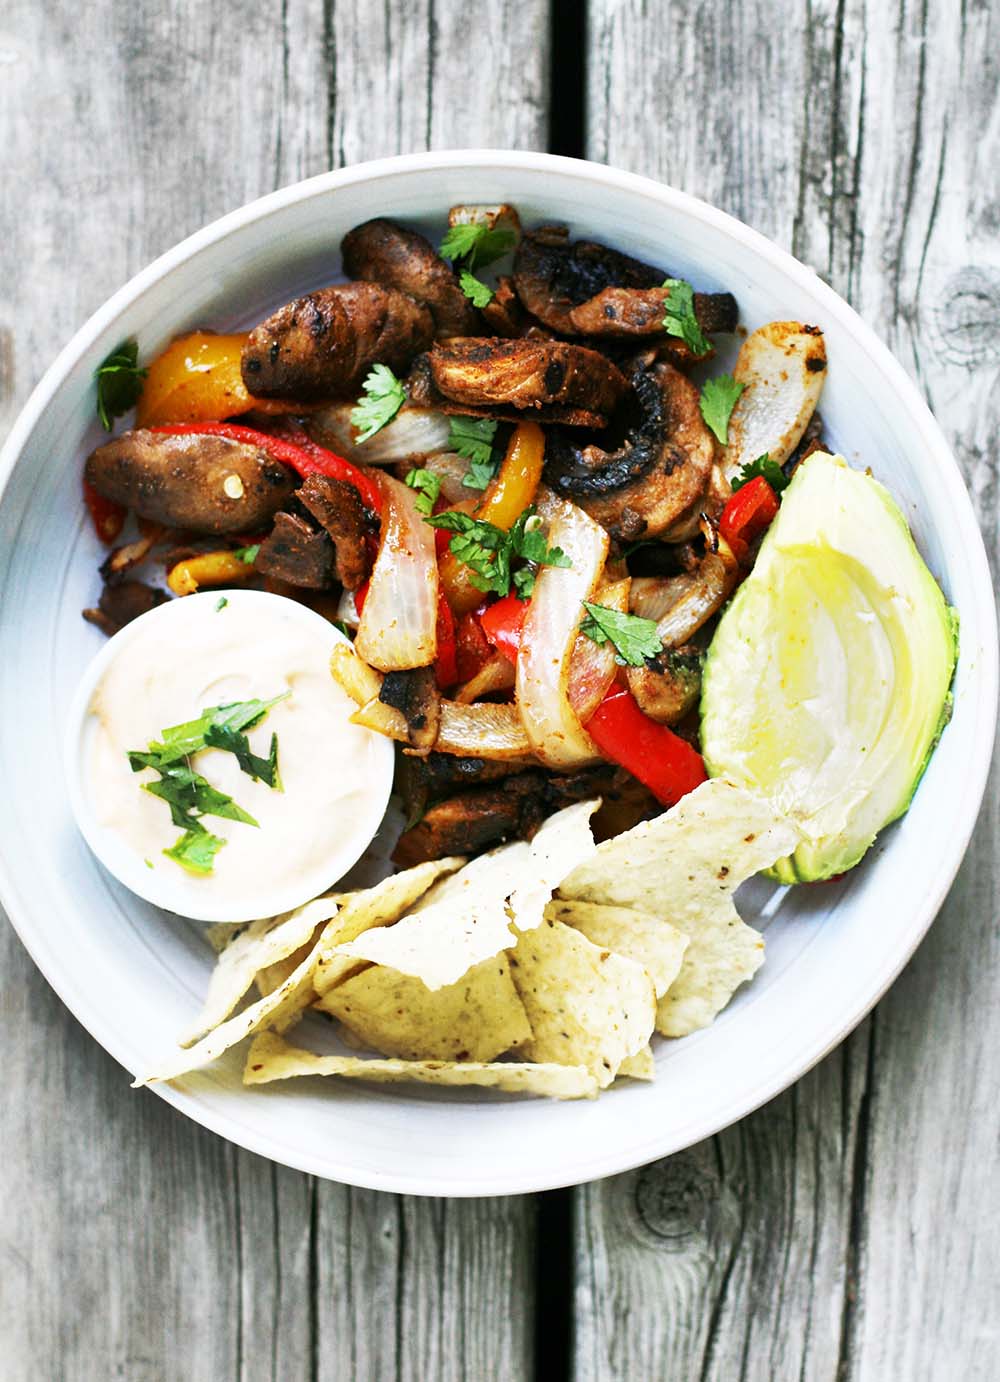 Vegetarian sheet pan fajitas: Use the veggies to make a veg fajita bowl!